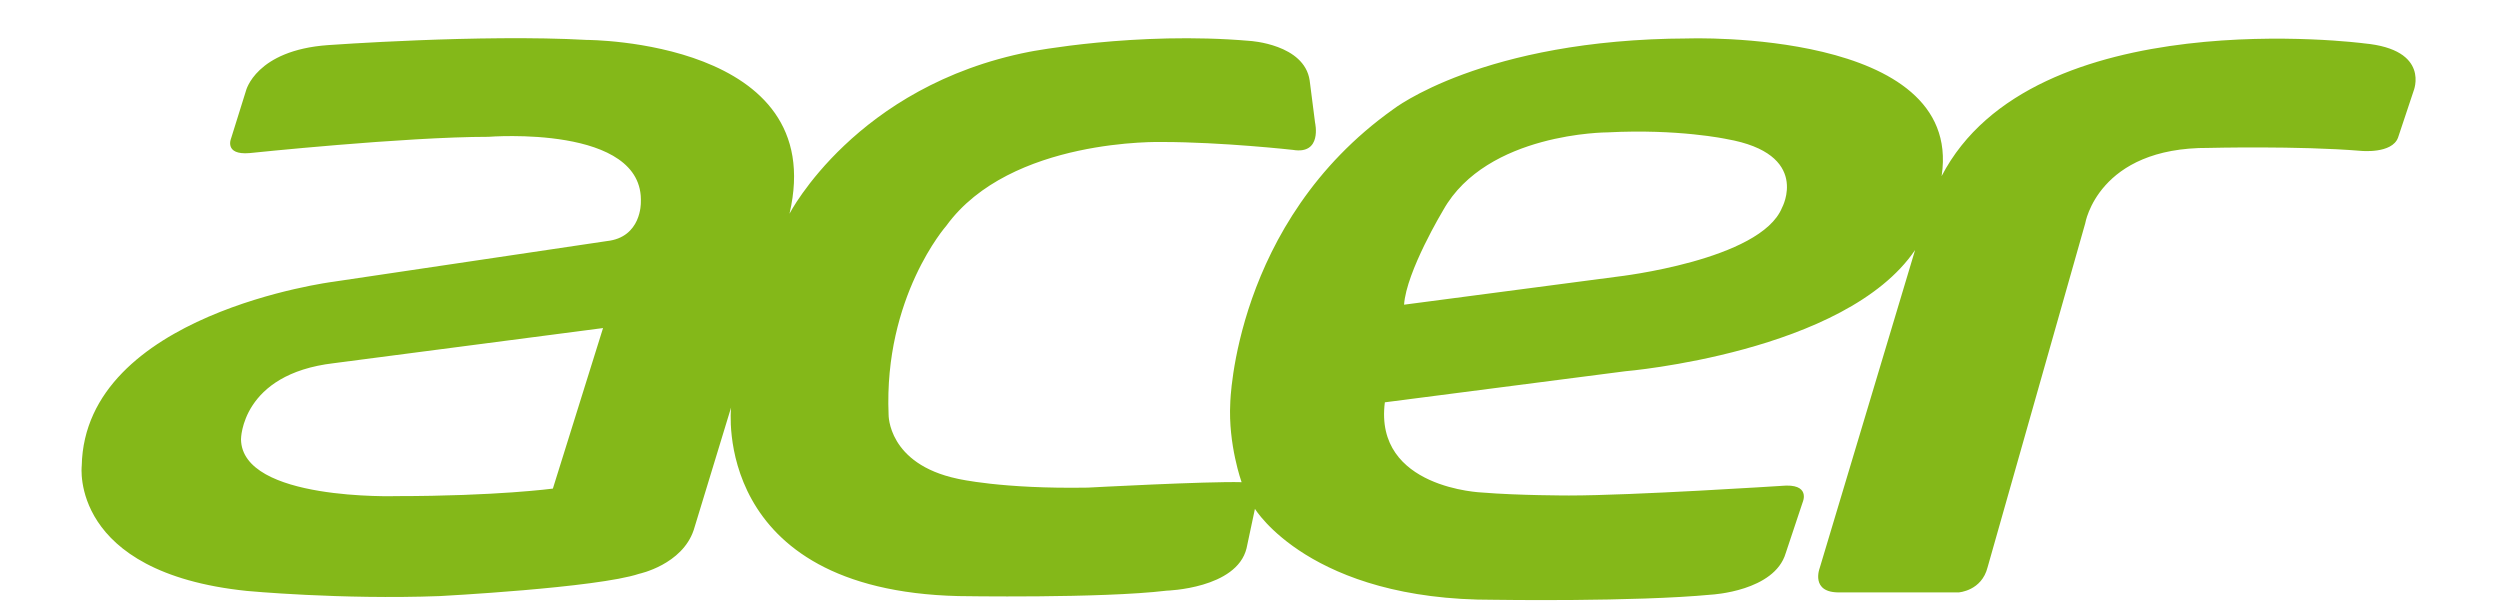 Acer Banner Logo